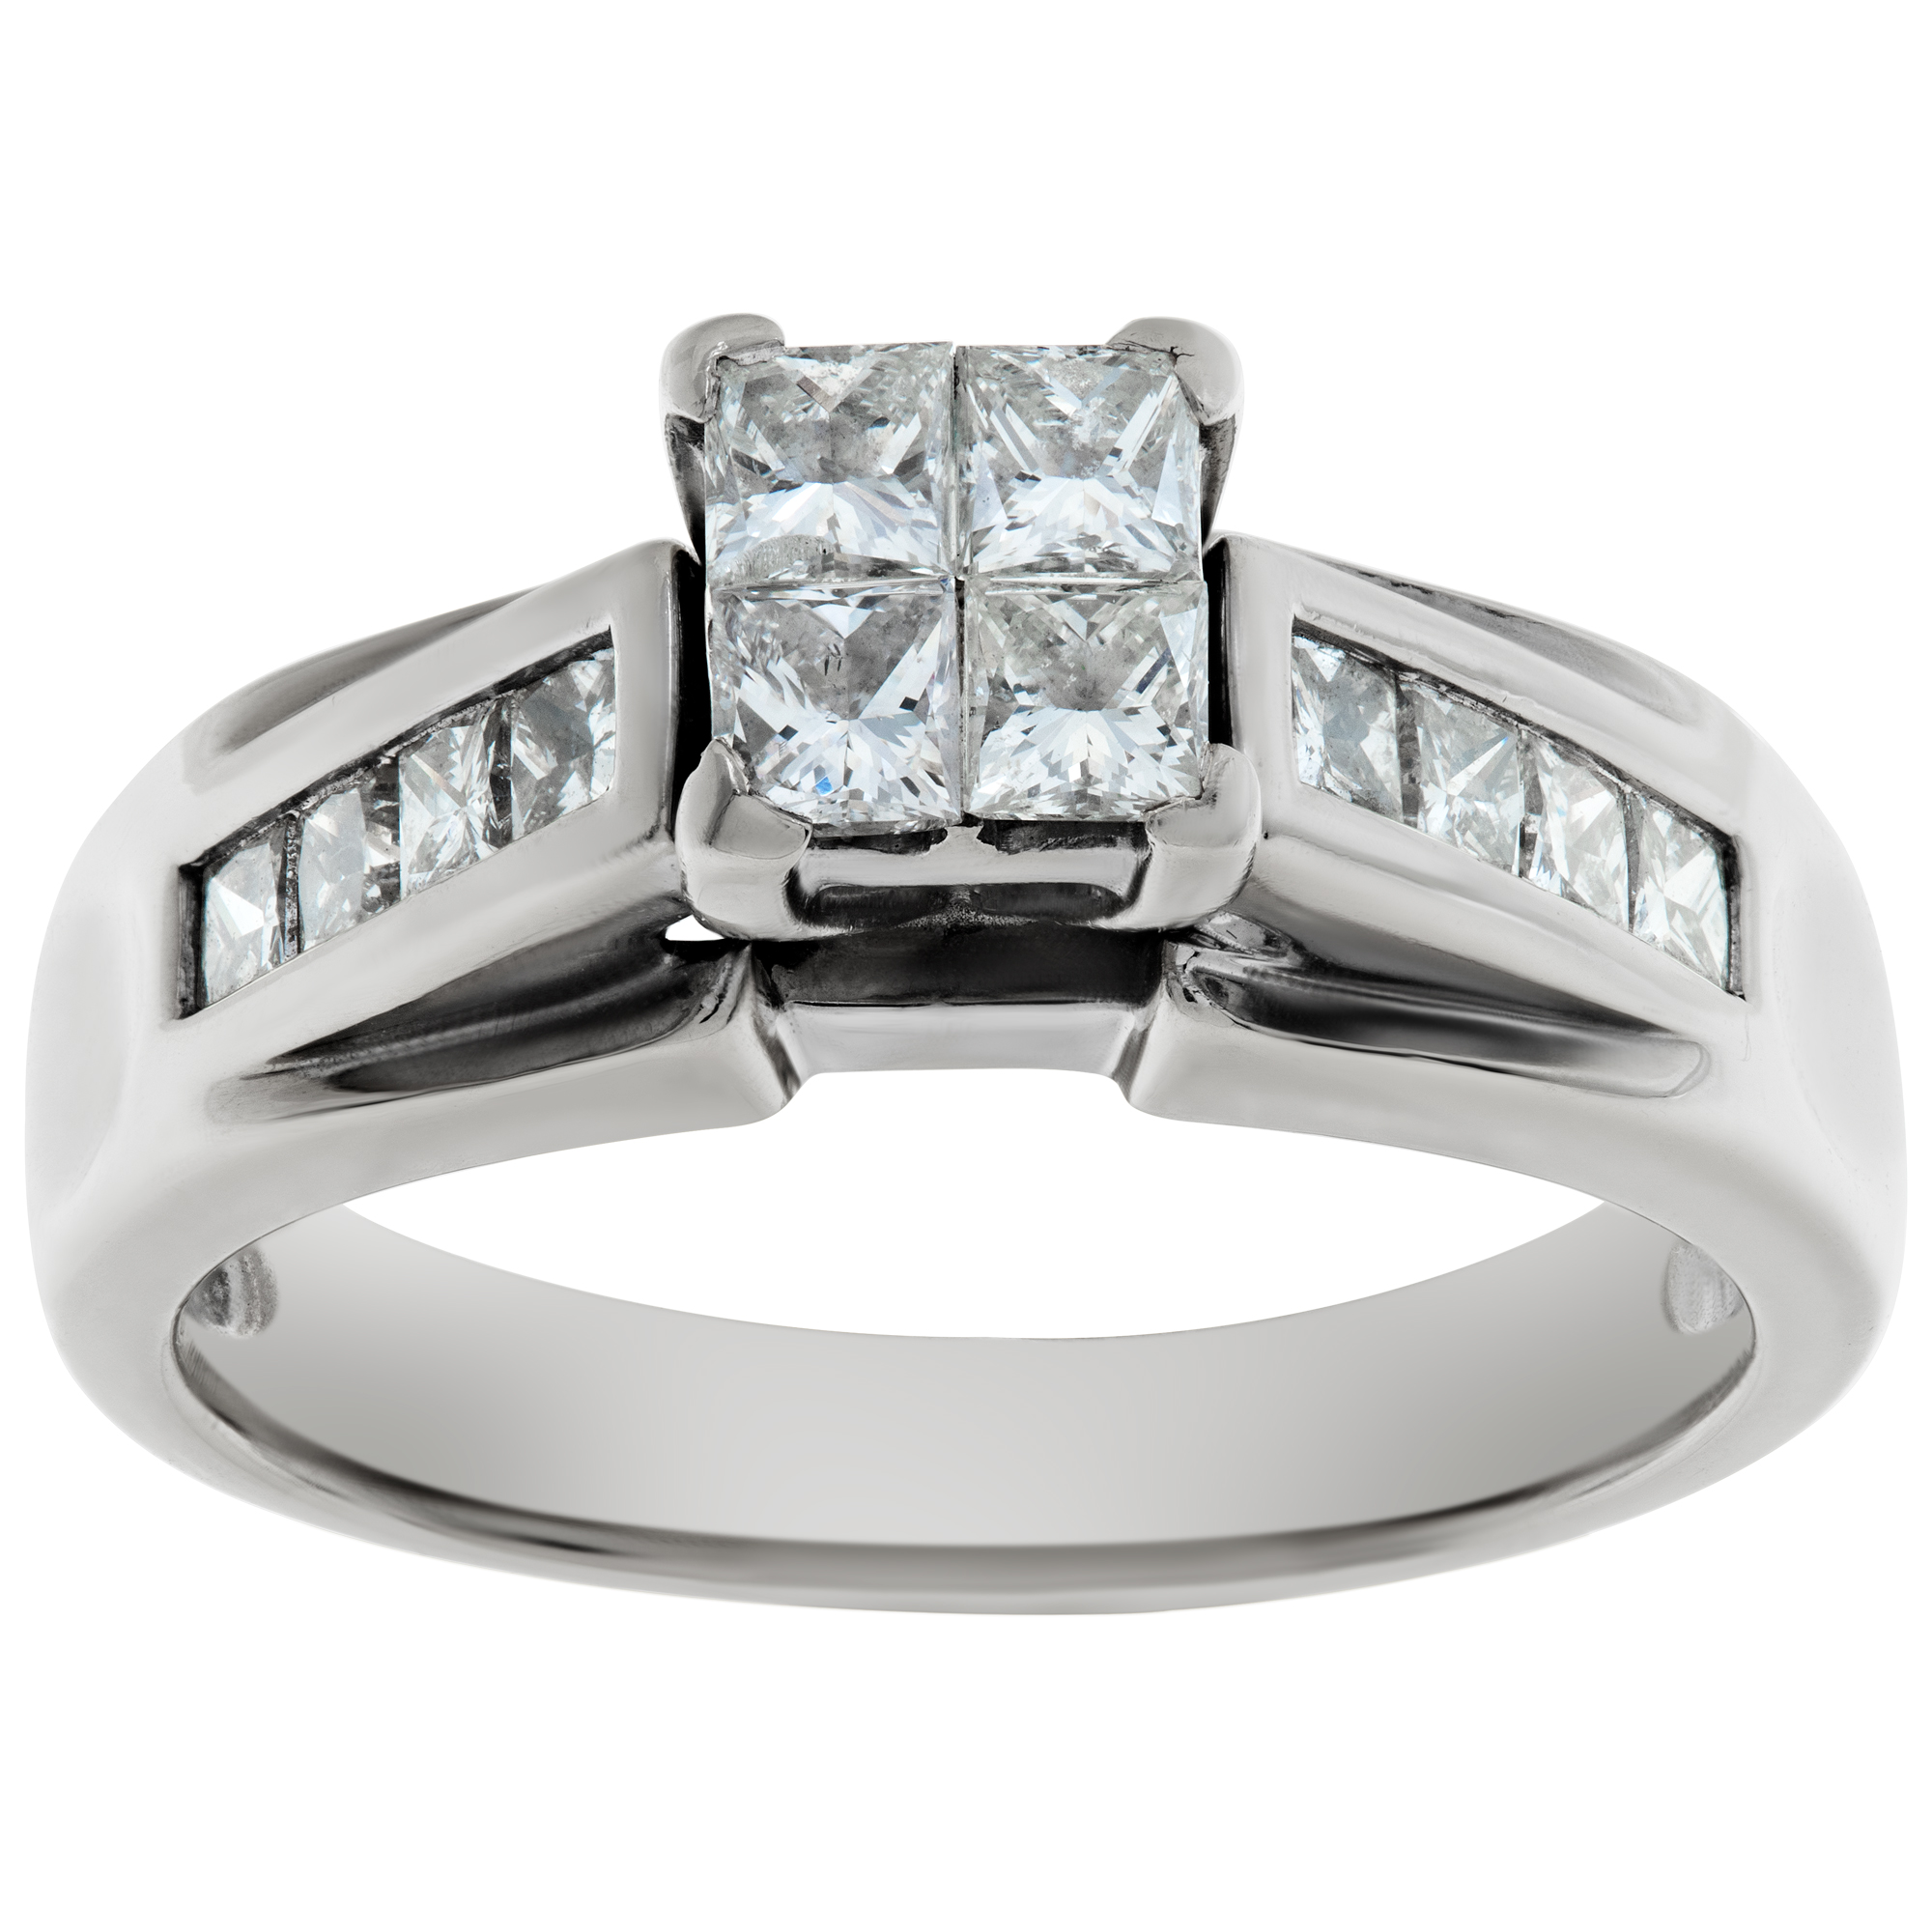 Illusion brilliant princess cut diamond ring set in 14k white gold. Princess cut diamonds approx. weight: 1.00 carat image 1